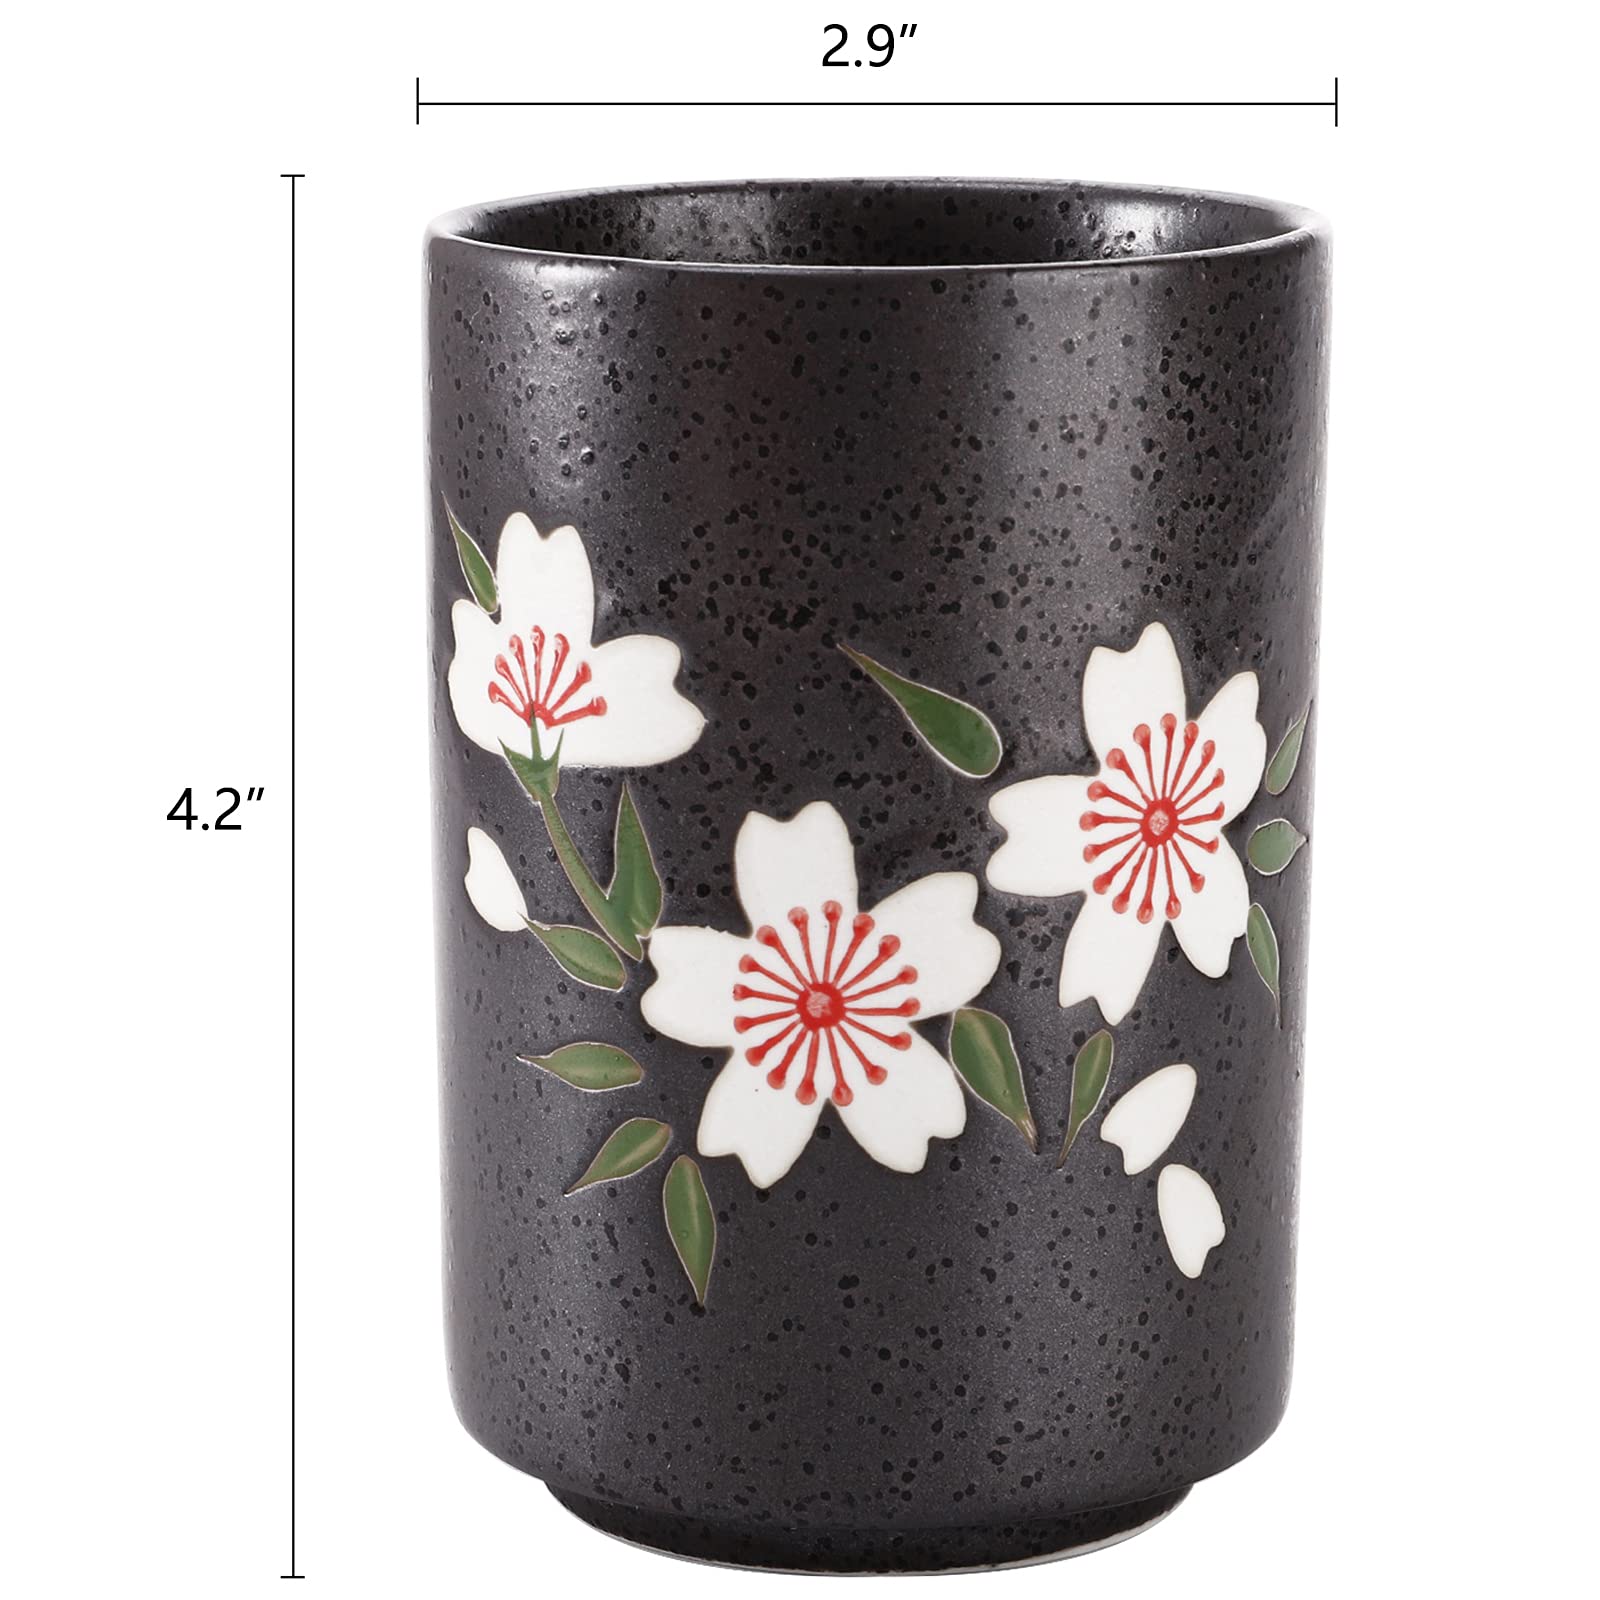 Hedume Set of 2 Japanese Tea Cups, 10oz Ceramic Teacup Mug, Japanese Cherry Blossoms and Line Design Ceramic Tea Cups Set for Green Tea, Matcha Tea, Bancha